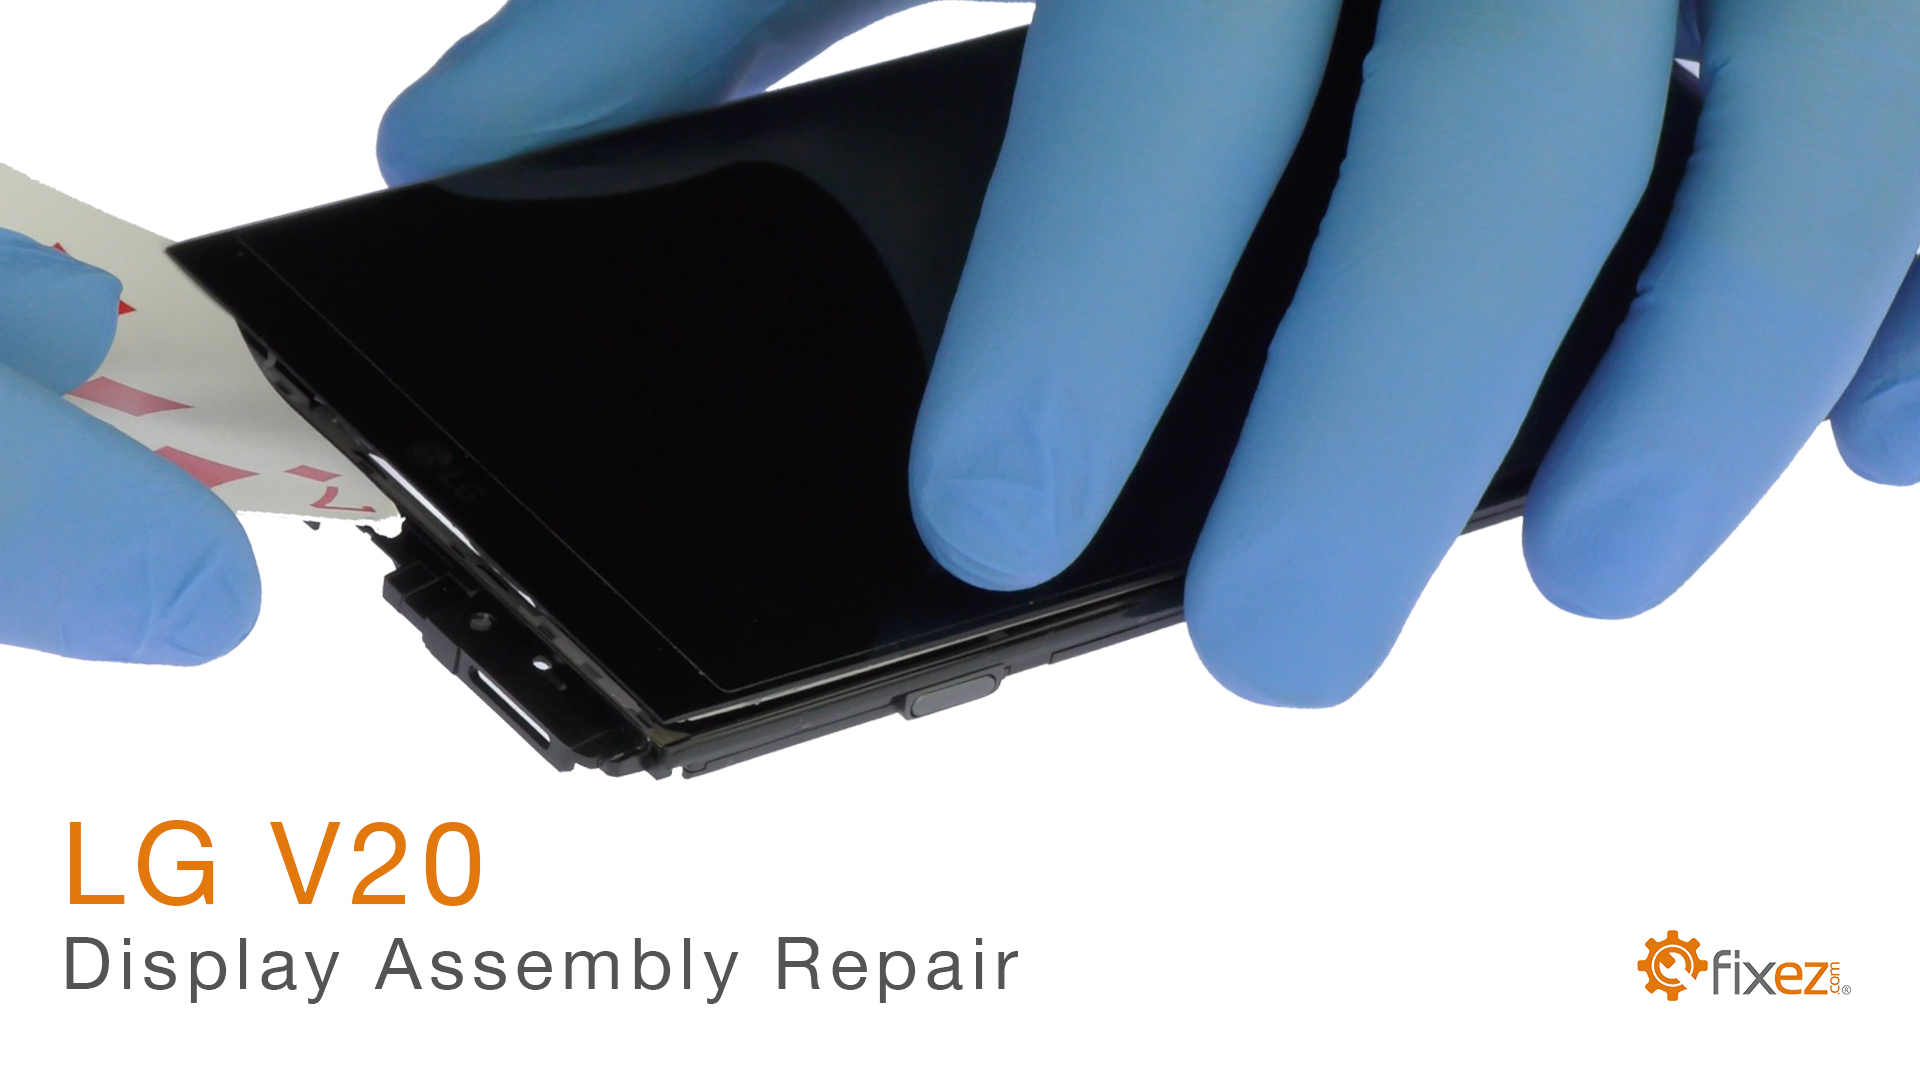 LG V20 Display Assembly Repair